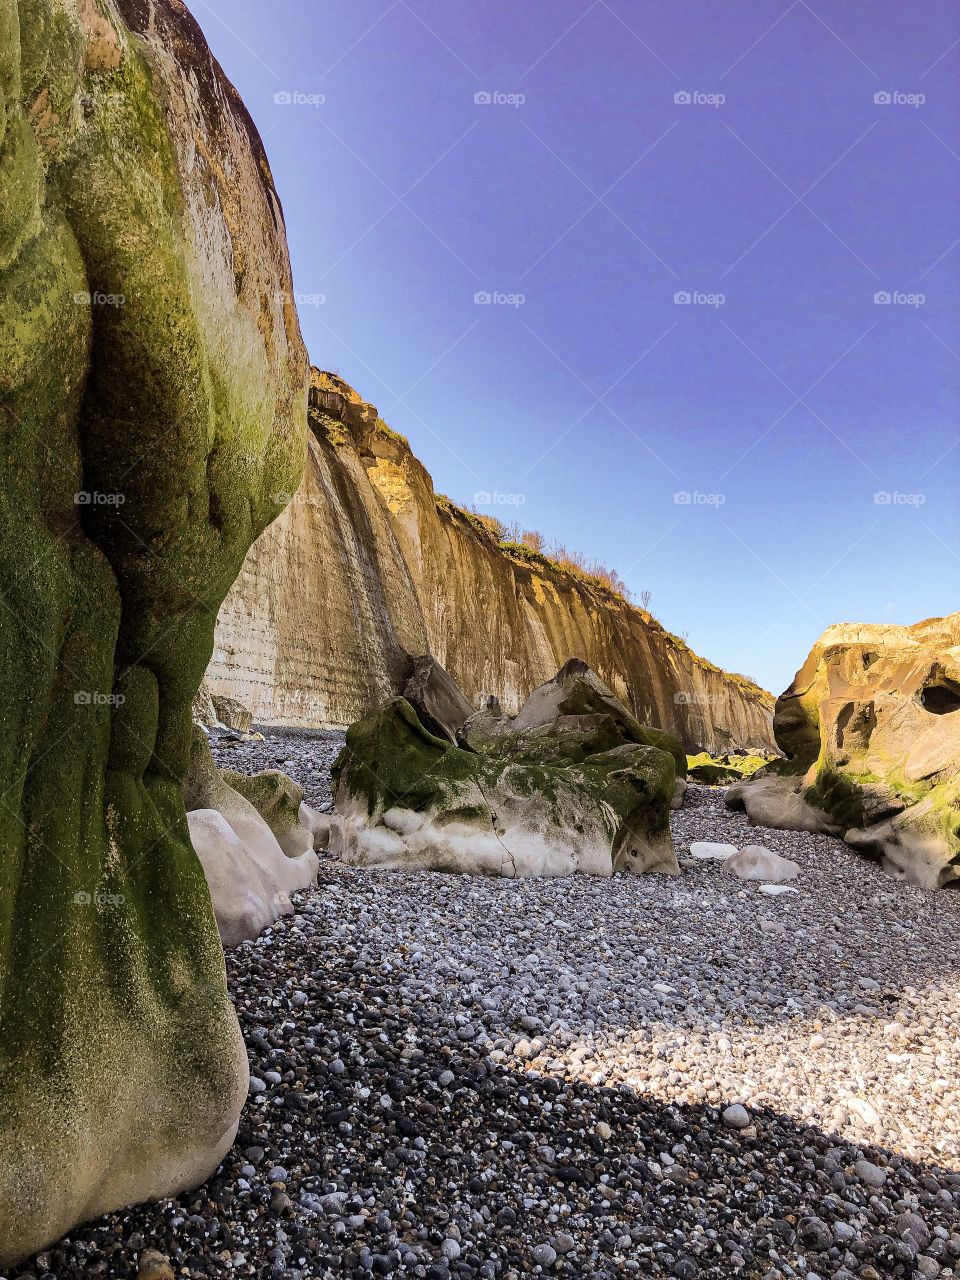 Cliffy seaside - France